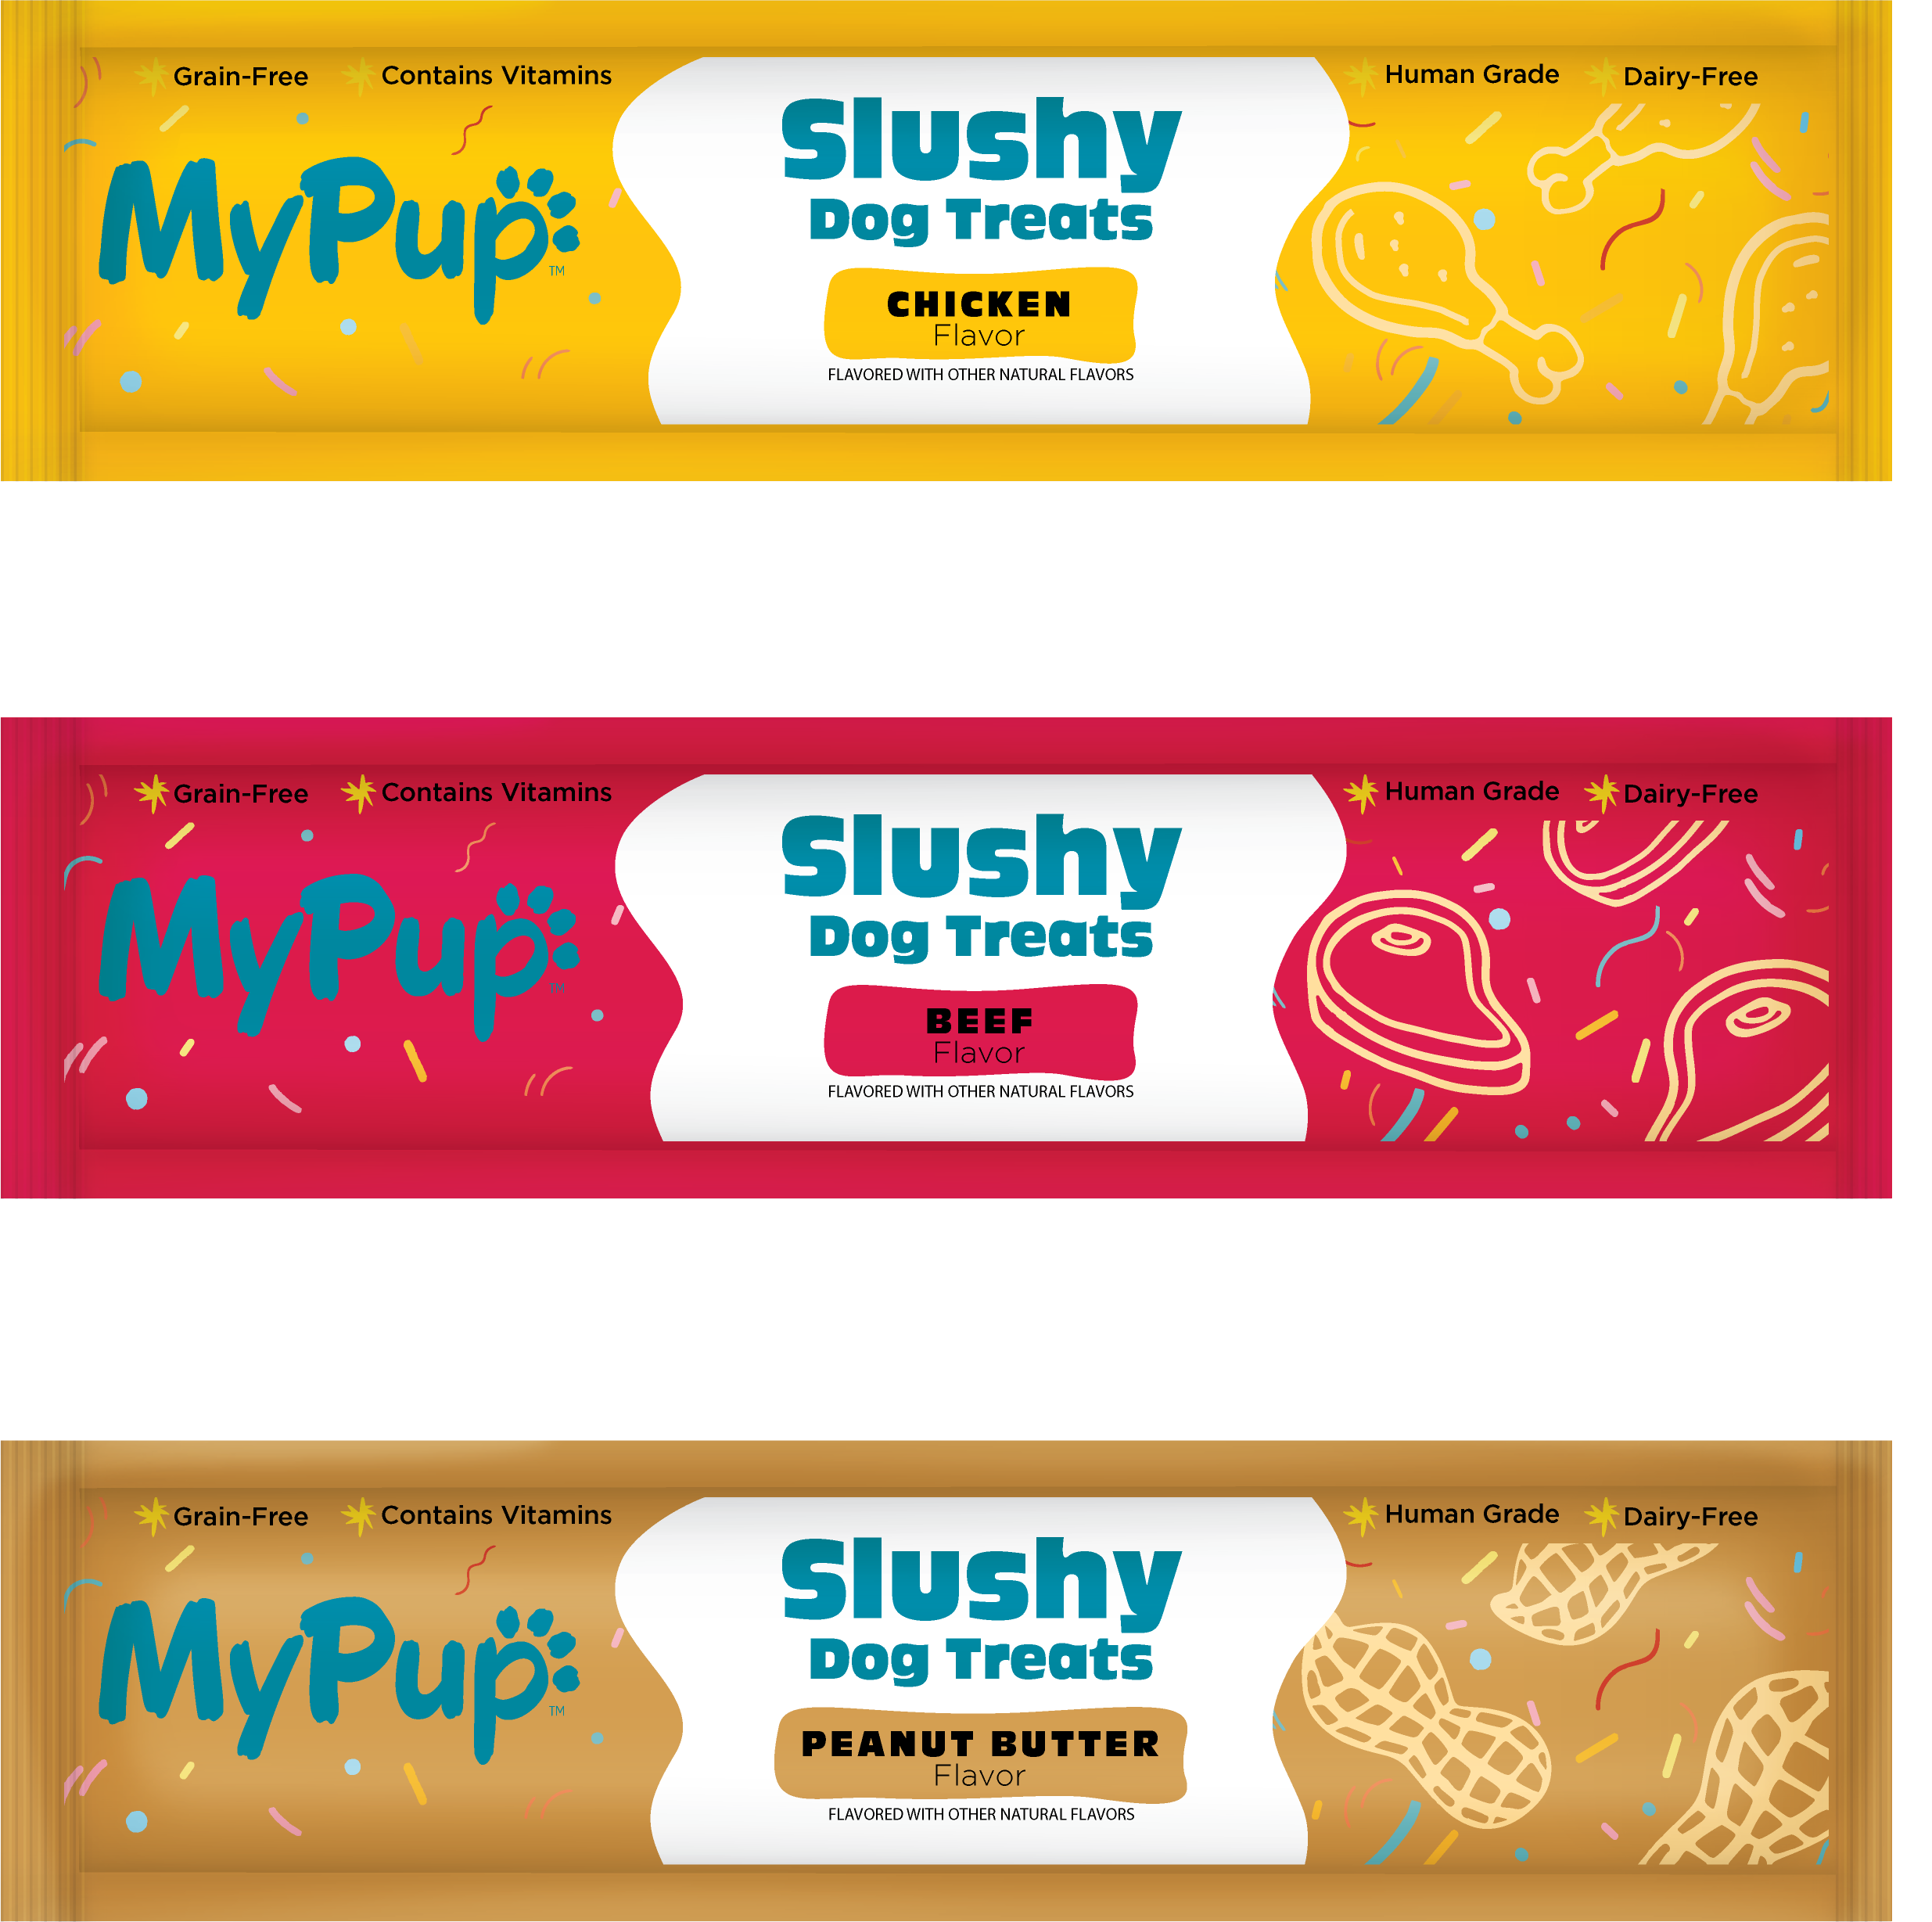 MyPups-slushy-dog-treats.png